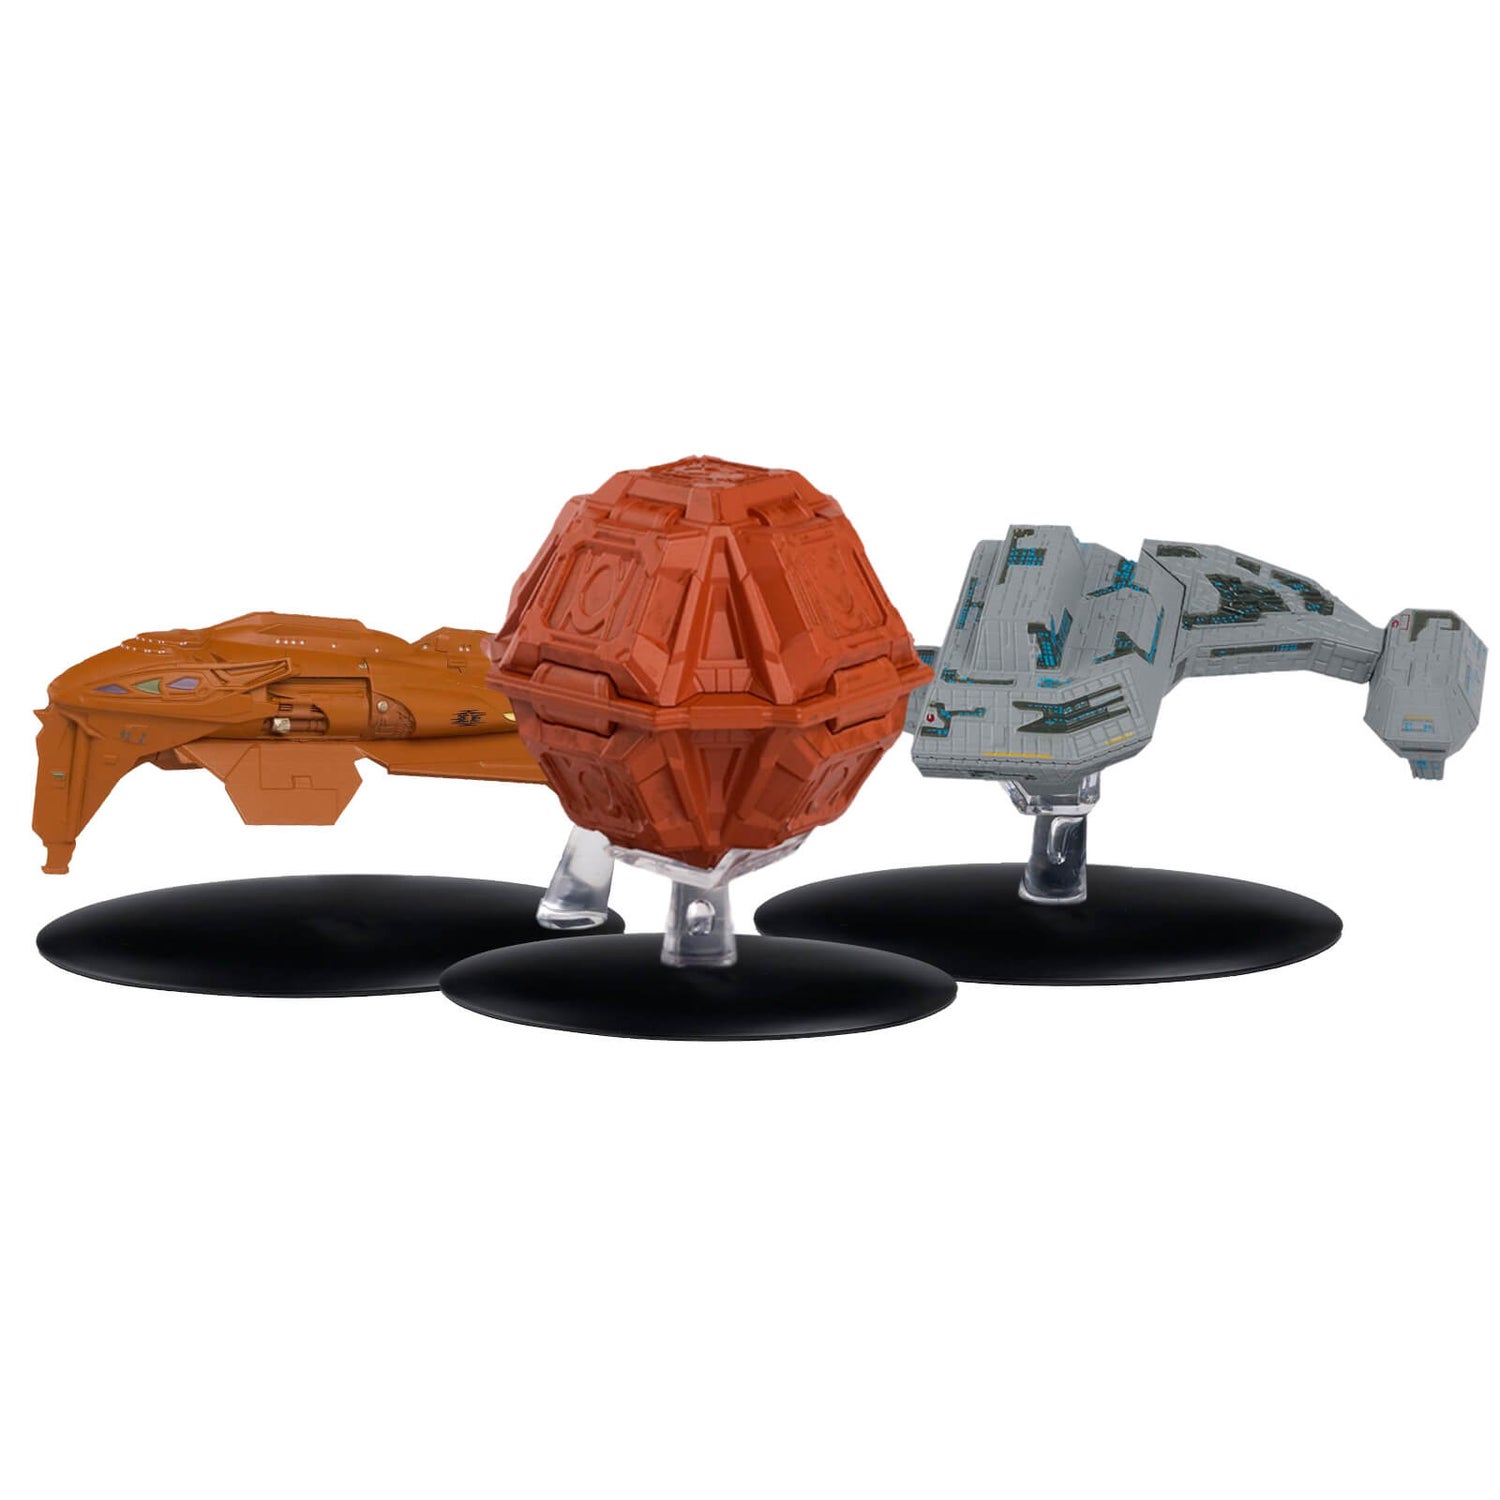 Star Trek Die Cast Ship Replica Bundle - 3 Items Included